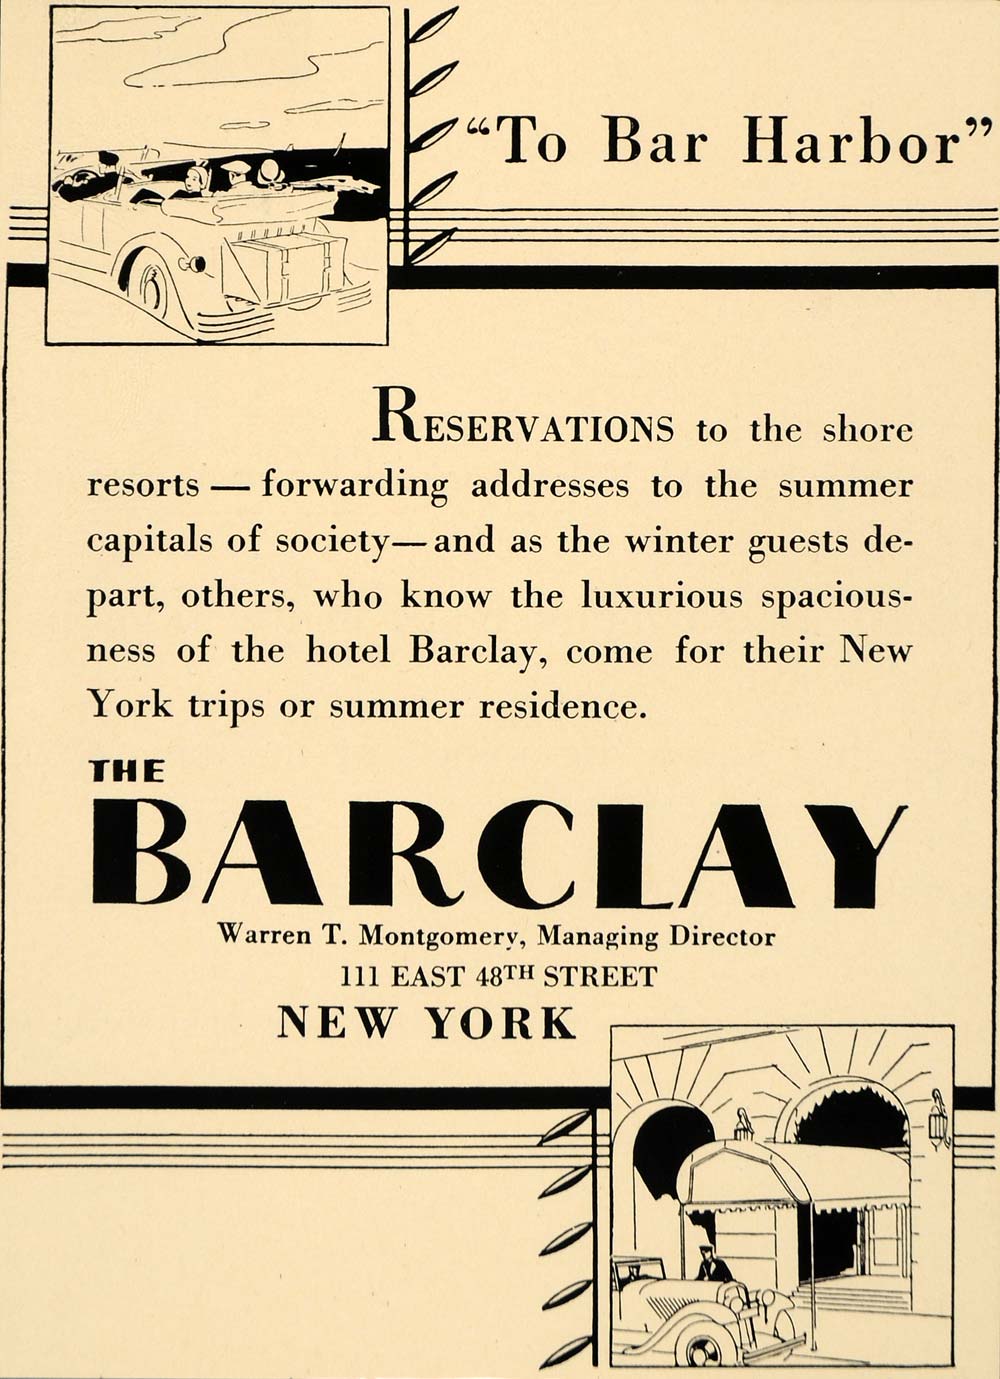 1931 Ad Barclay Luxurious Hotel Bar Harbor Vacation - ORIGINAL ADVERTISING F1A